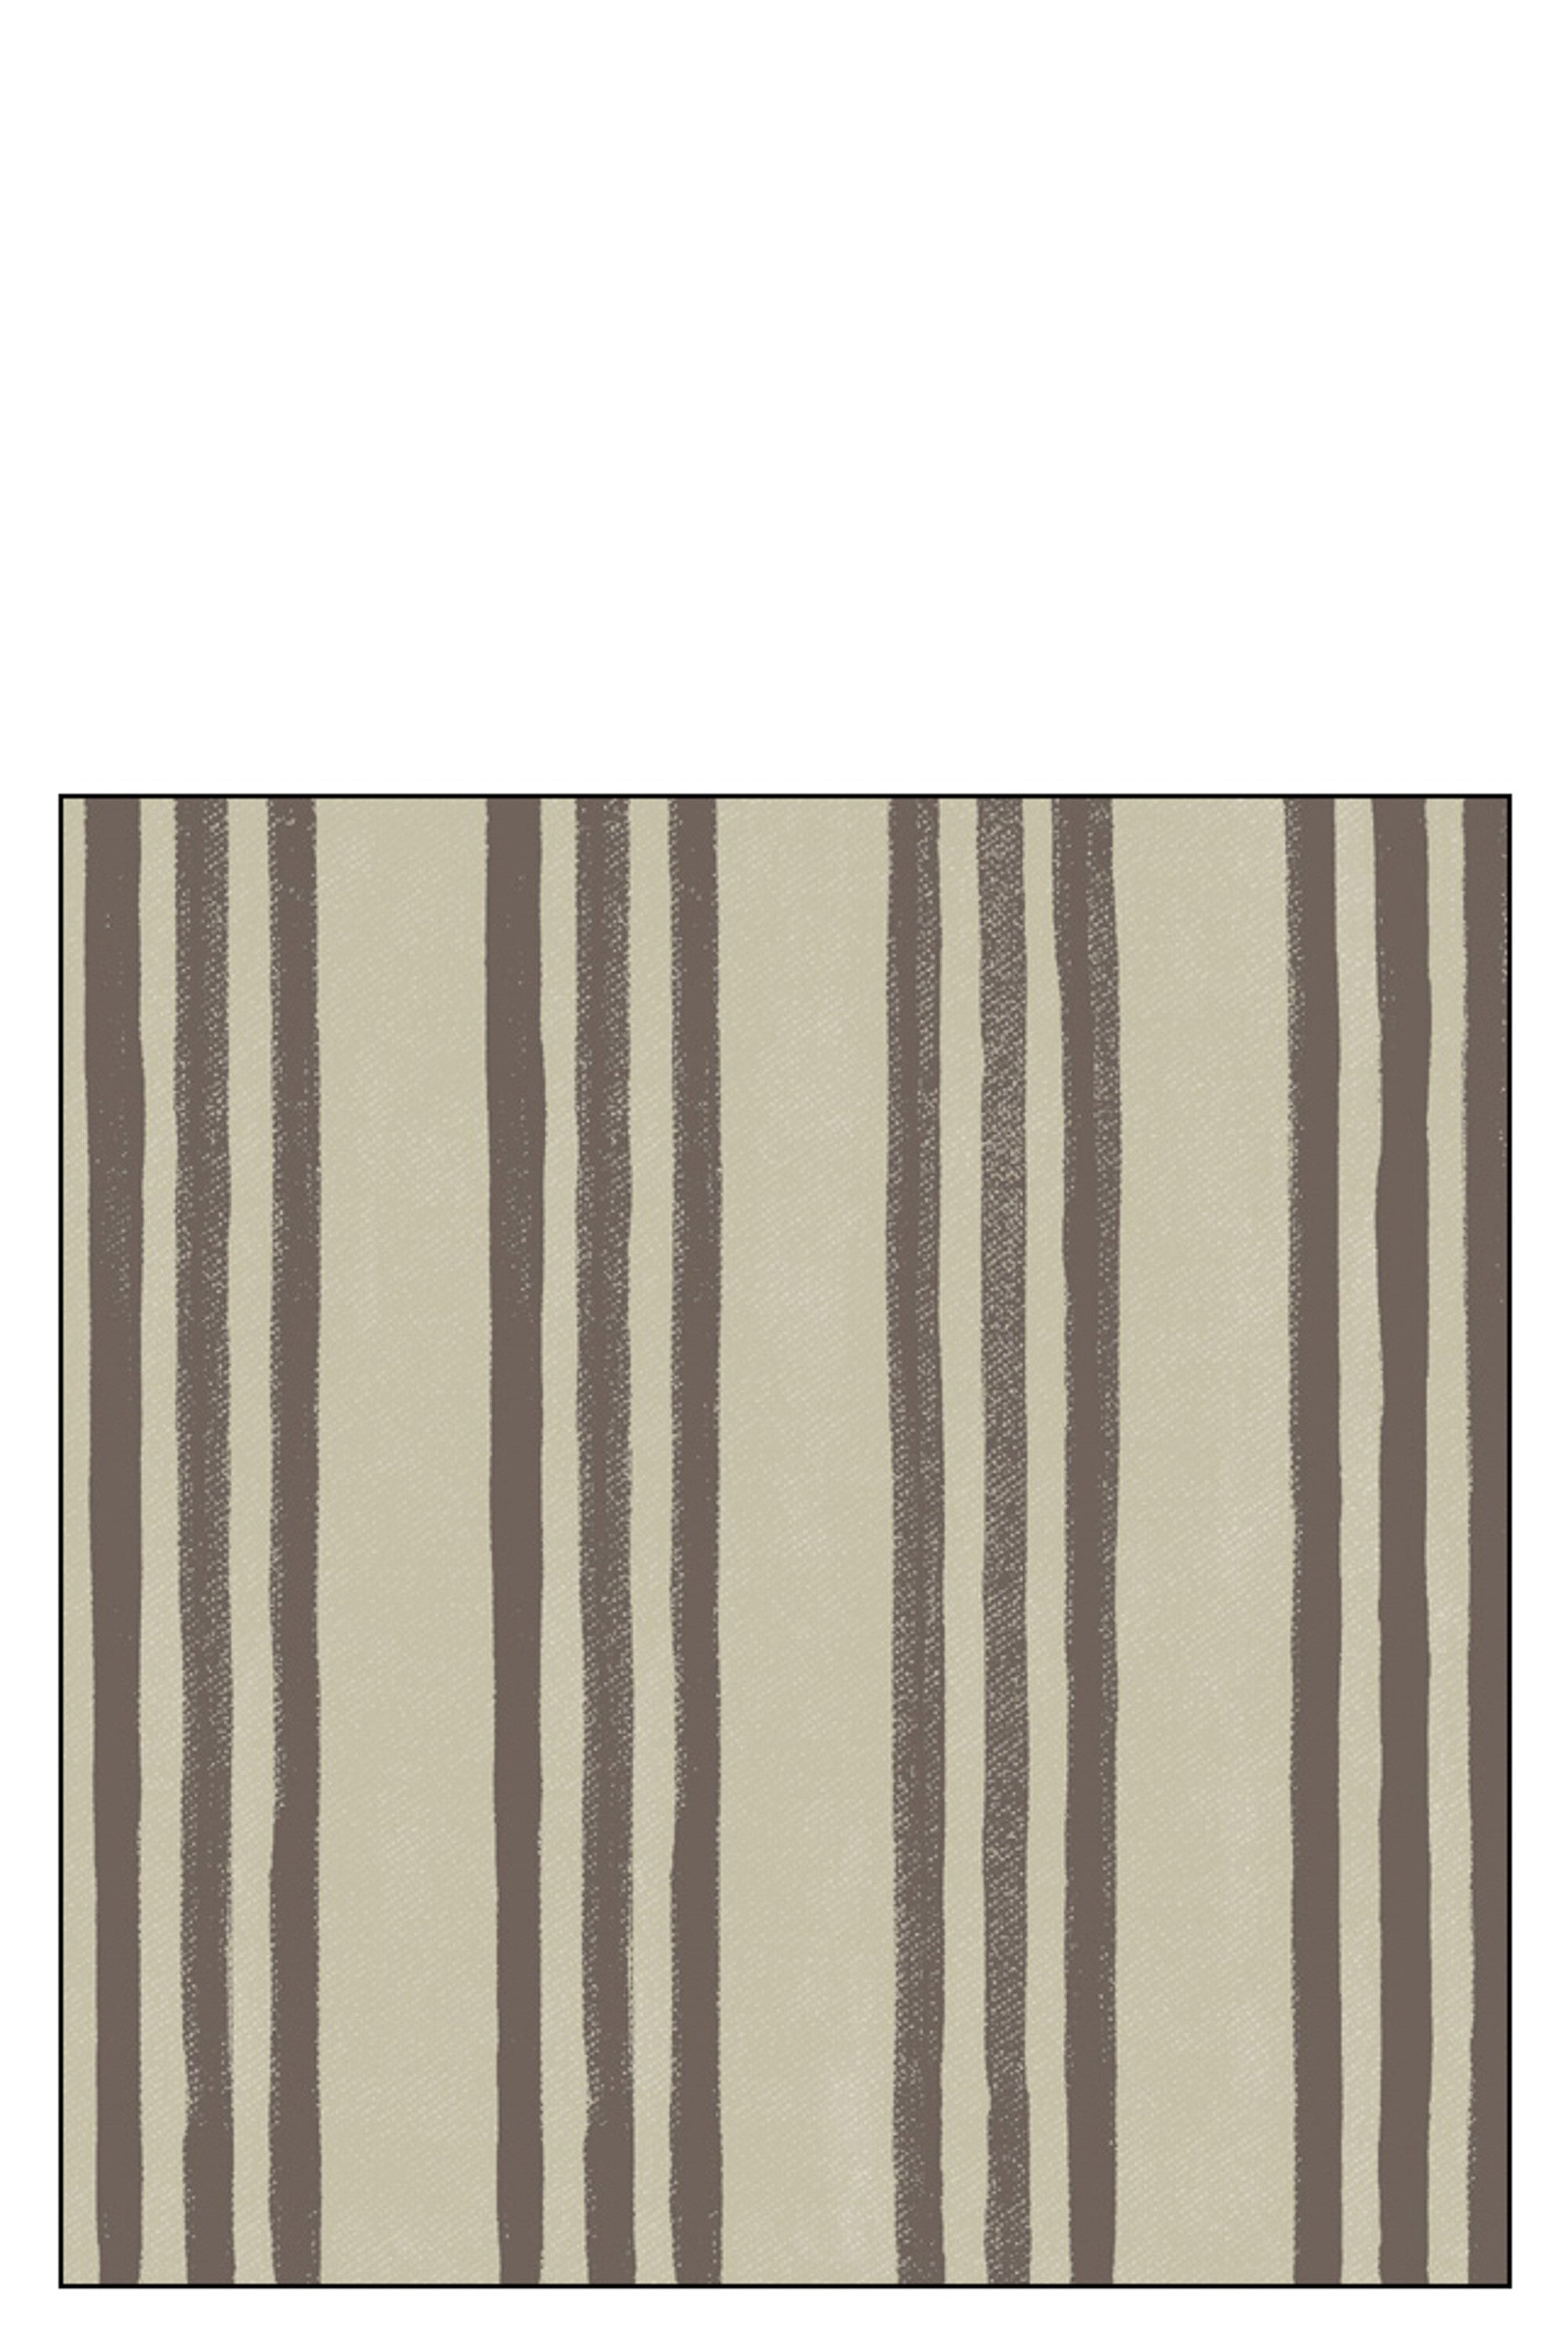 Striped napkins